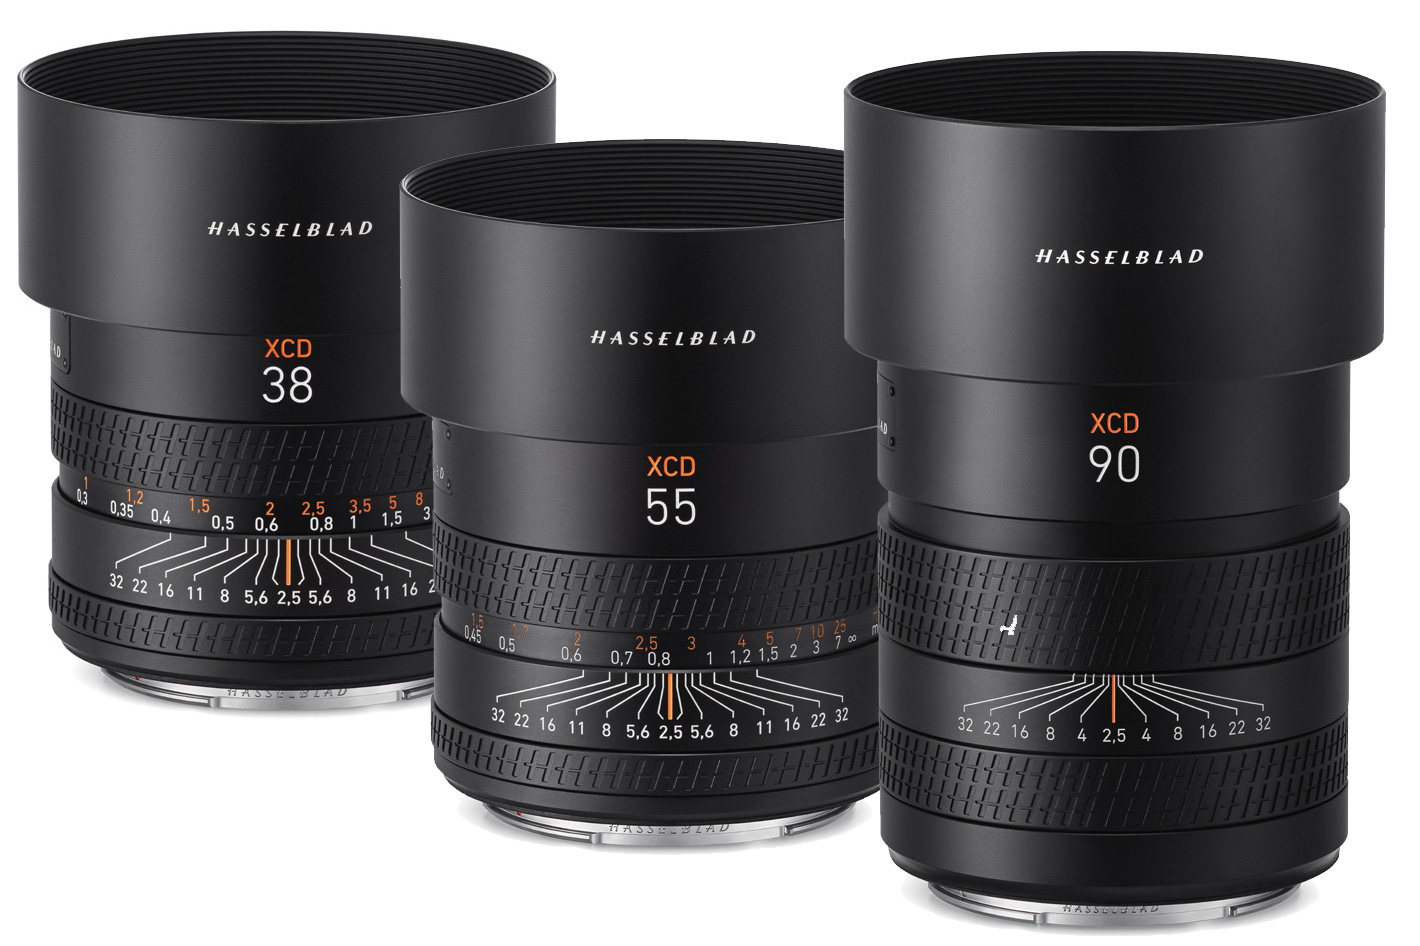 Hasselblad X2D 100C reveals a new flagship camera and three lenses